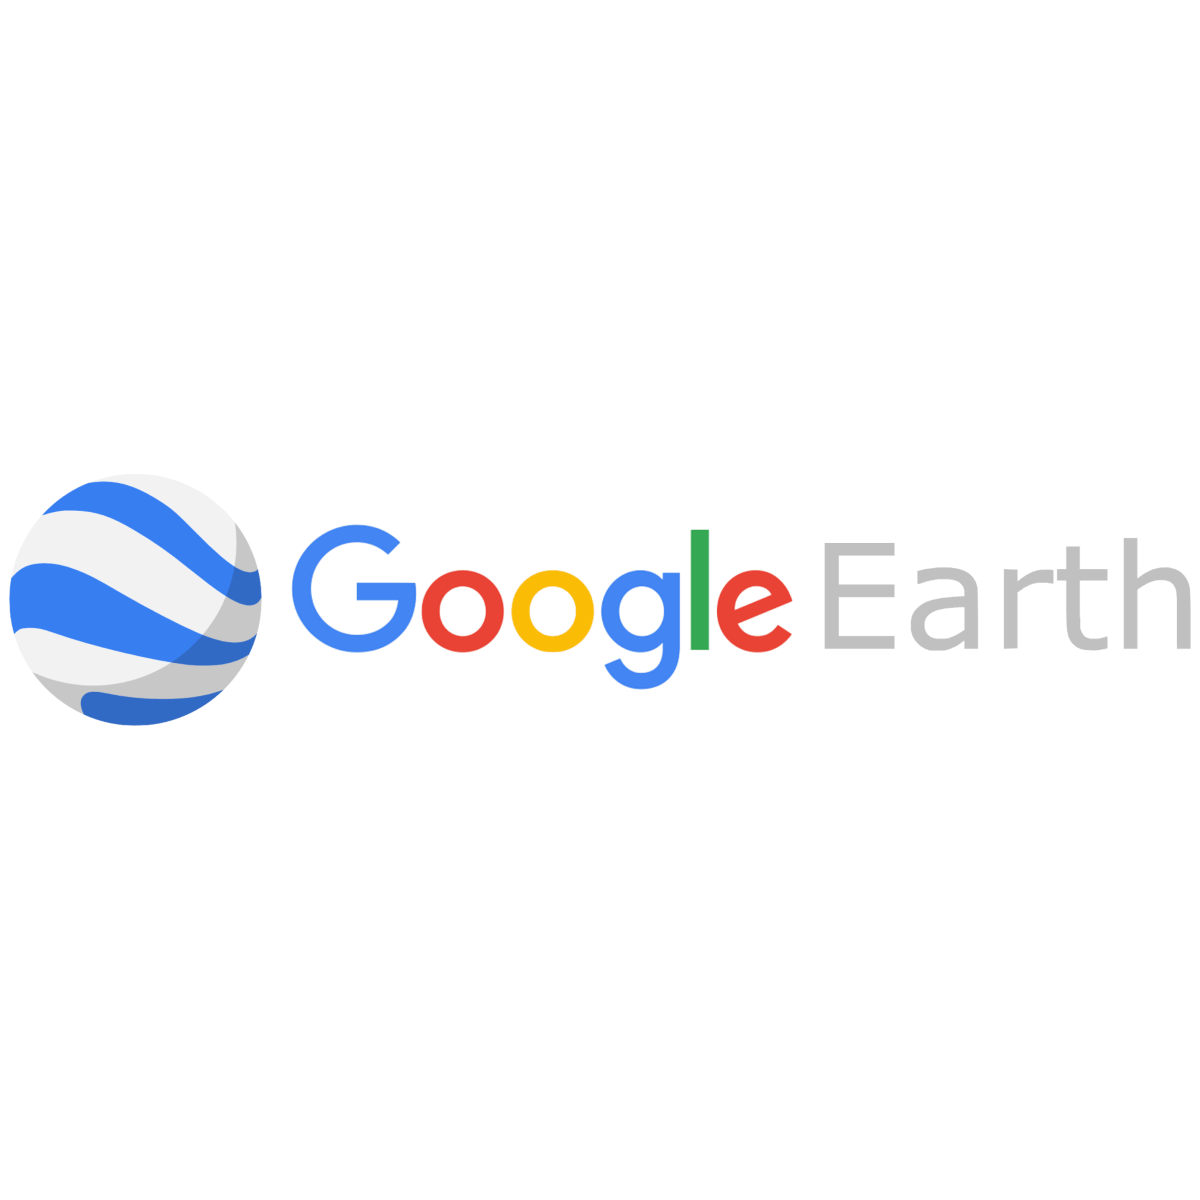 google earth myplaces.kml not responding